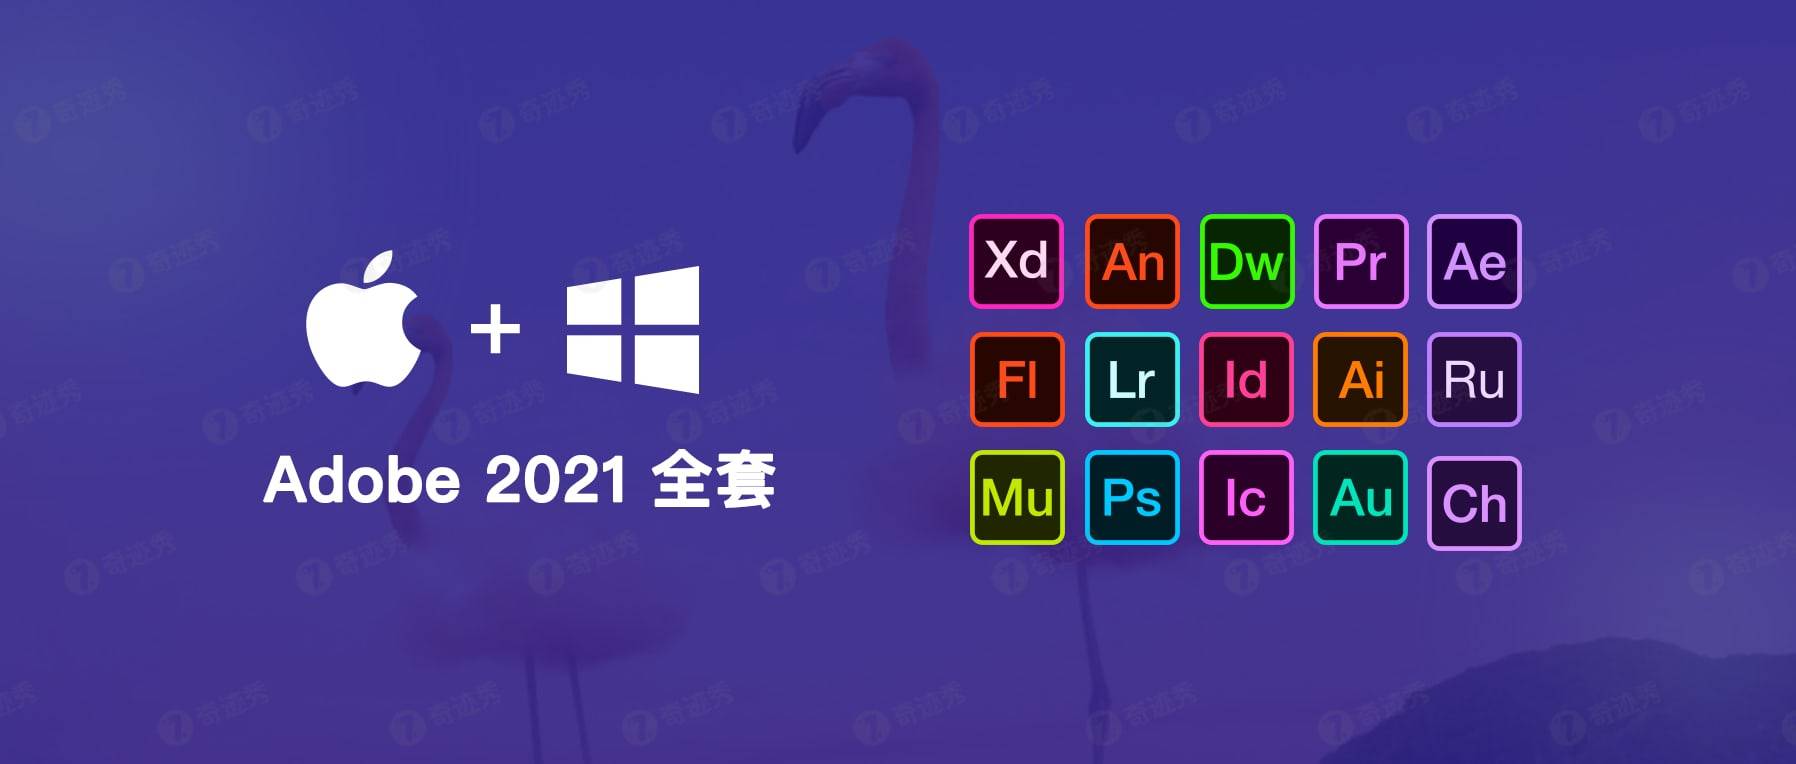 Adobe CC 2021整套插图